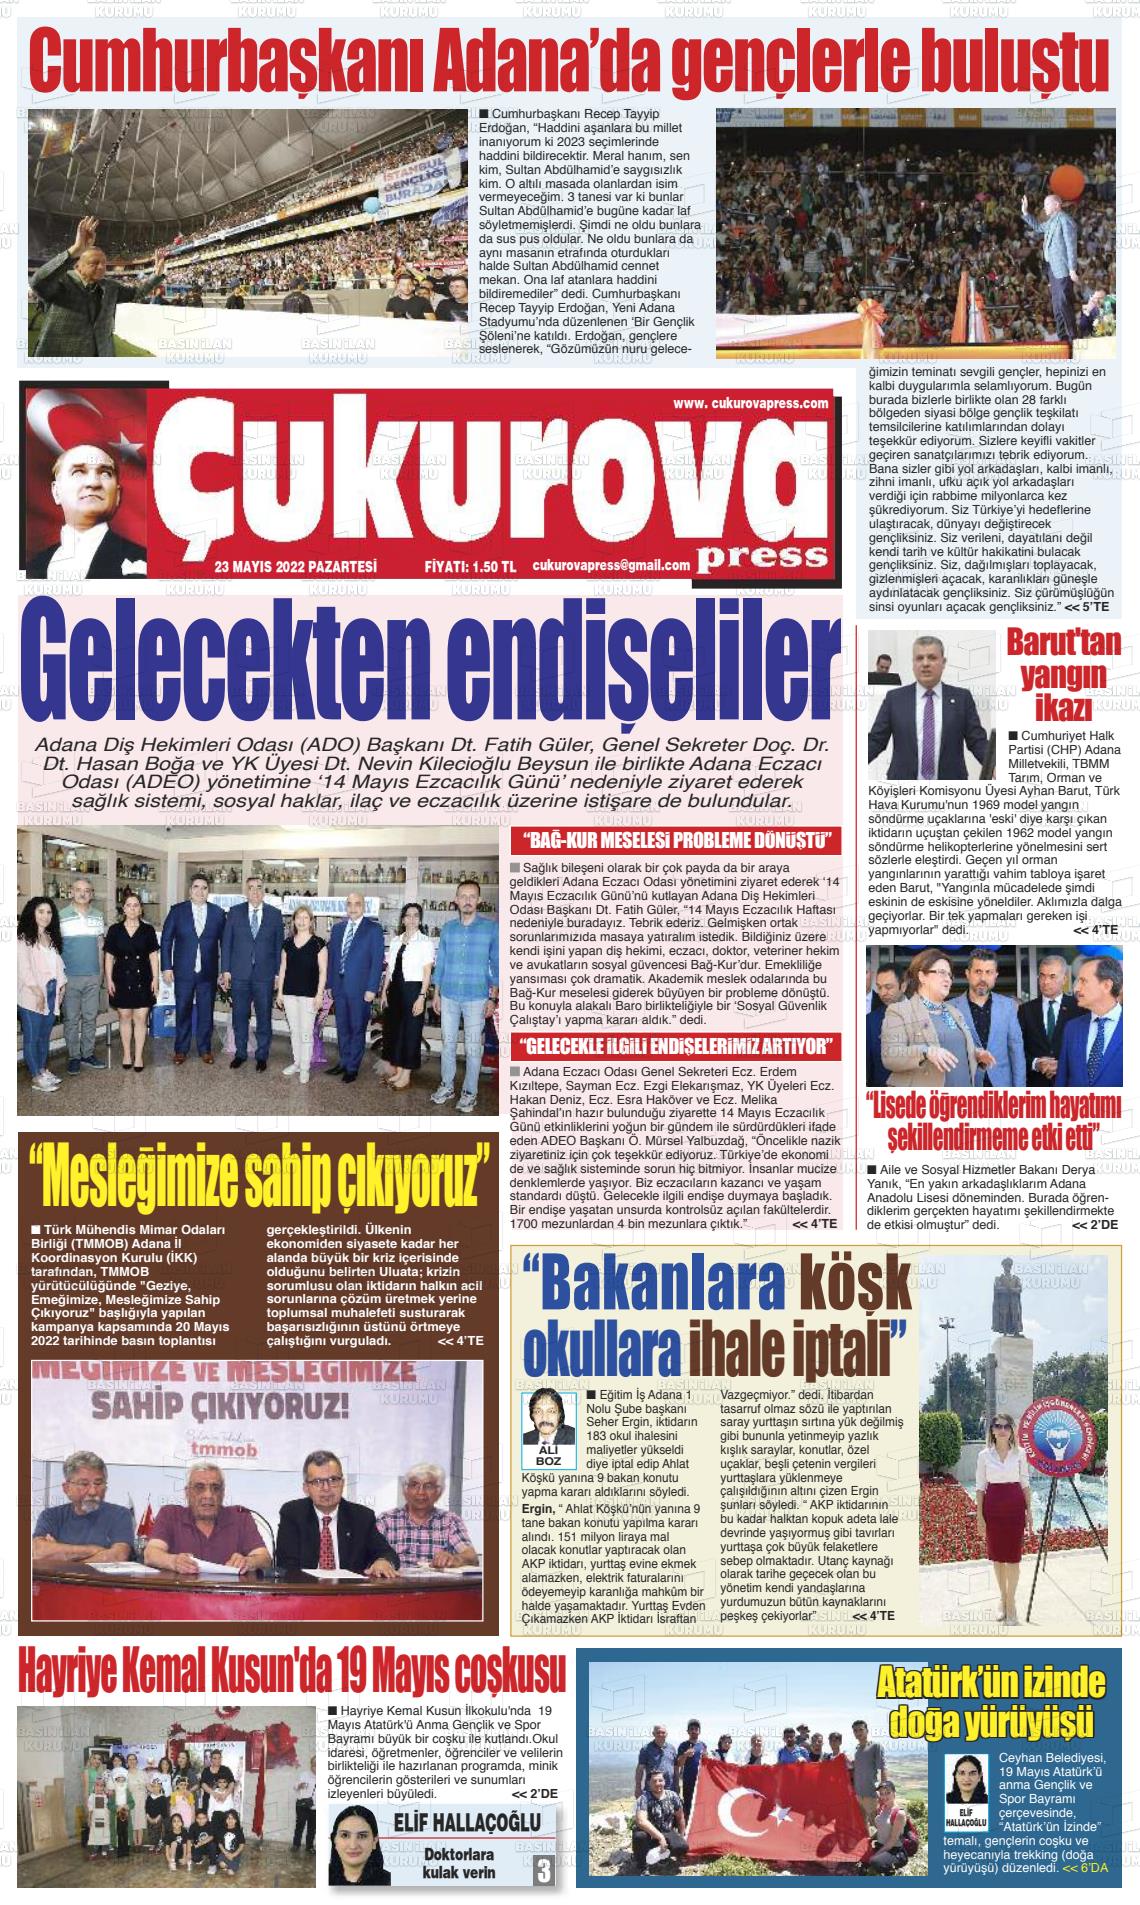 23 Mayıs 2022 Çukurova Press Gazete Manşeti